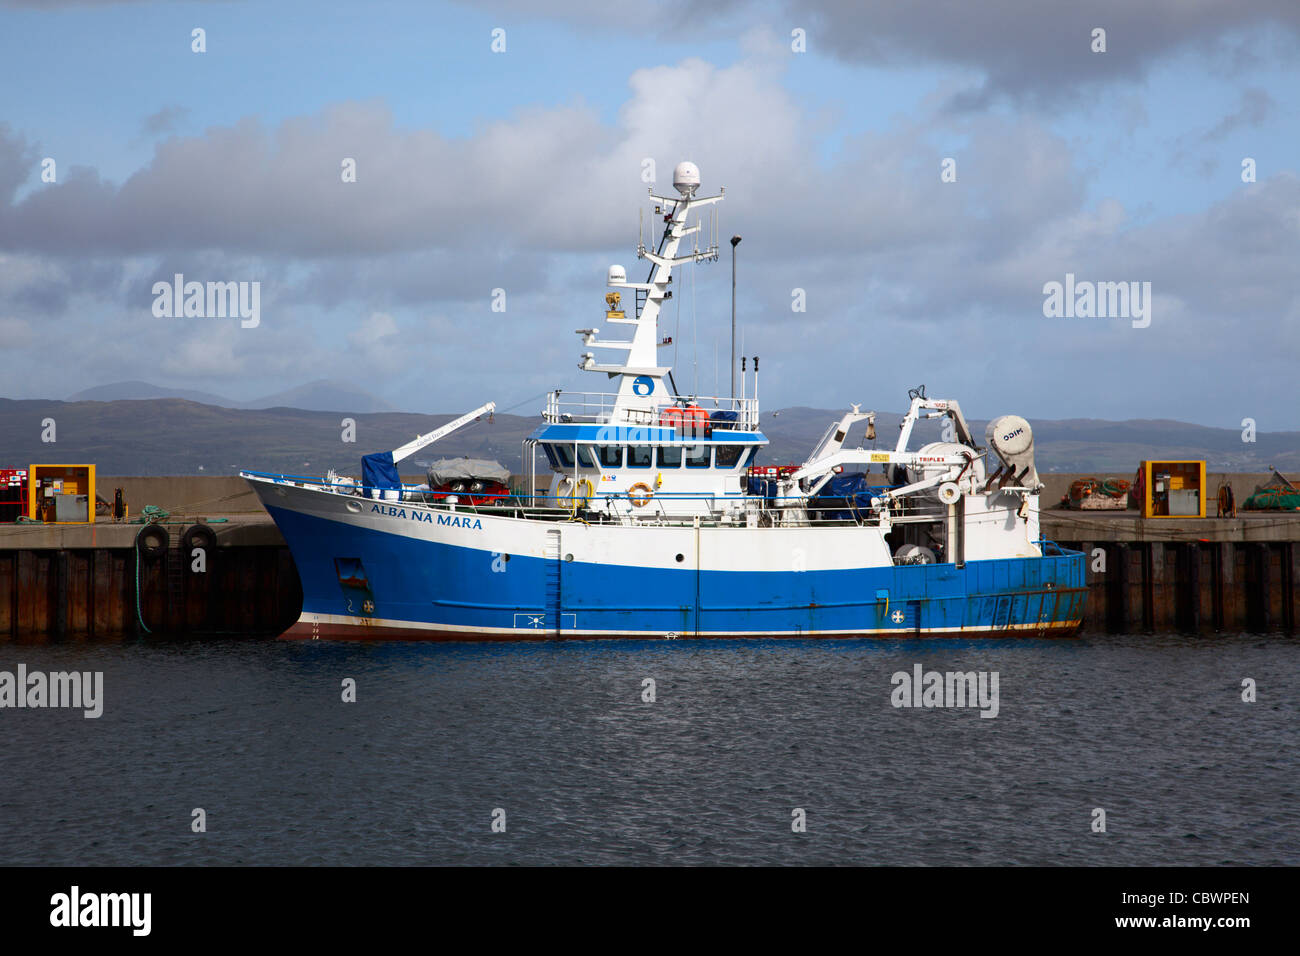 Angelboot/Fischerboot ' Alba Na Mara' in Mallaig Hafen Schottland Stockfoto